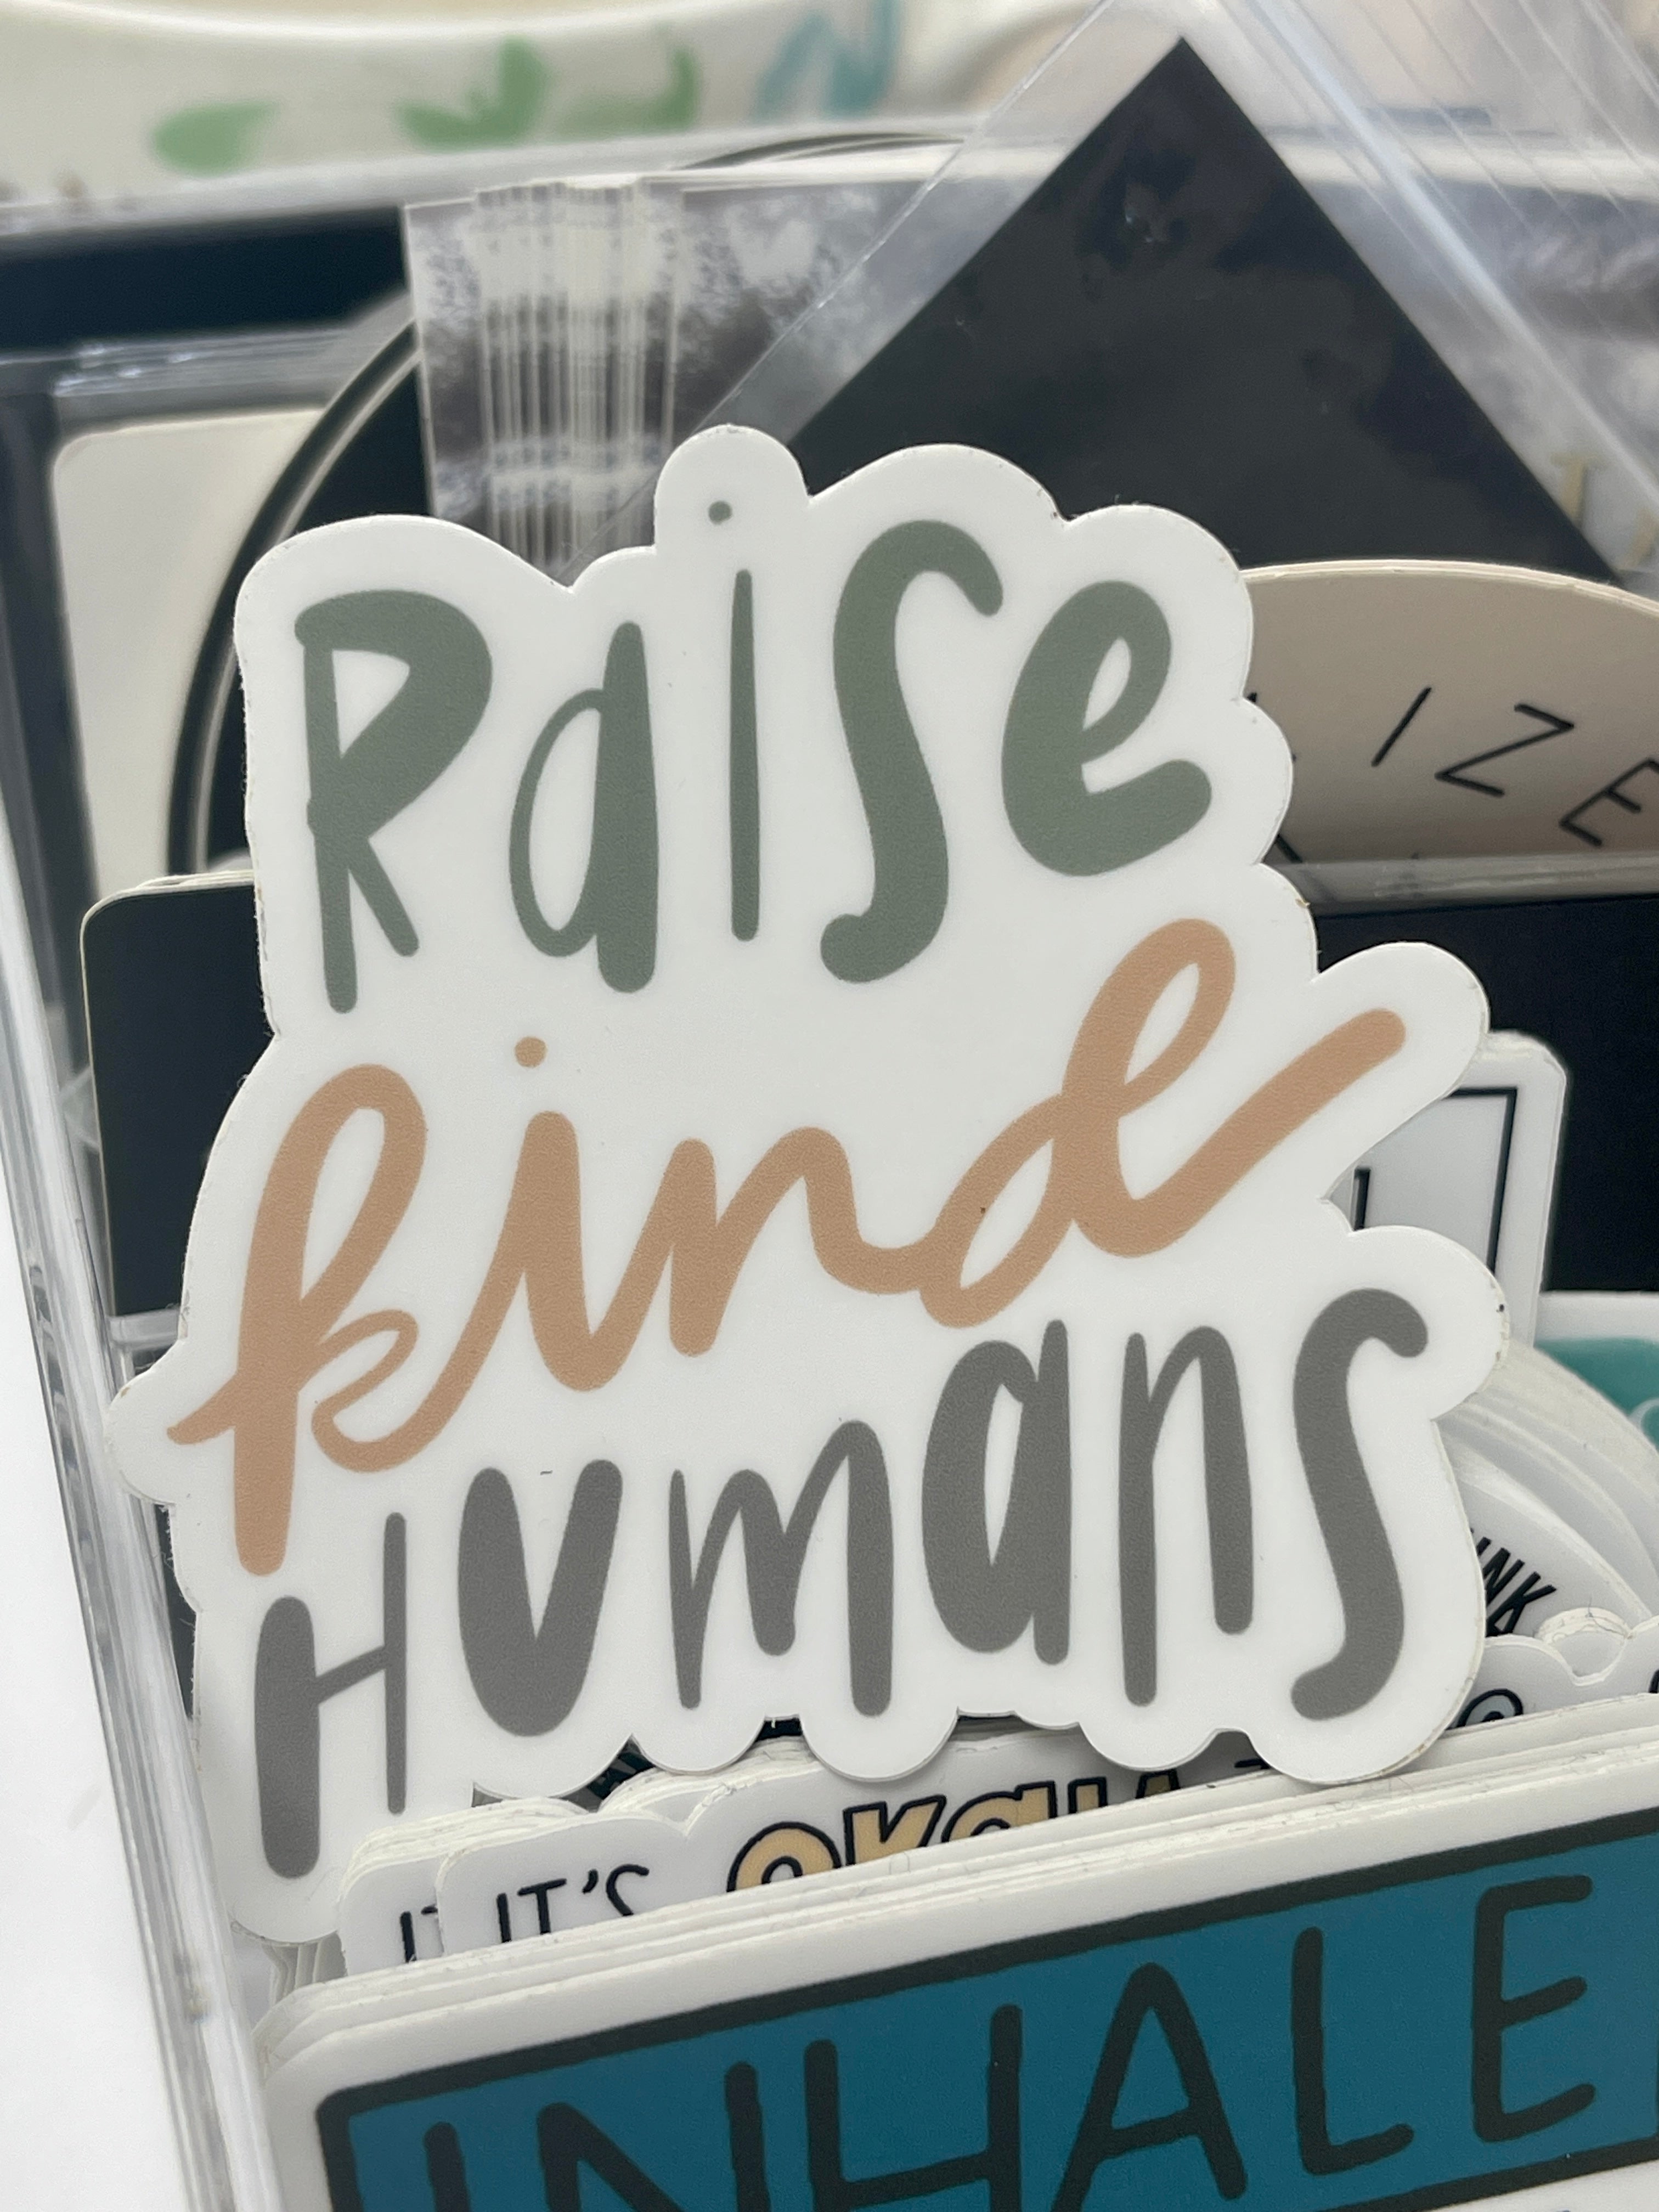 Raise kind humans